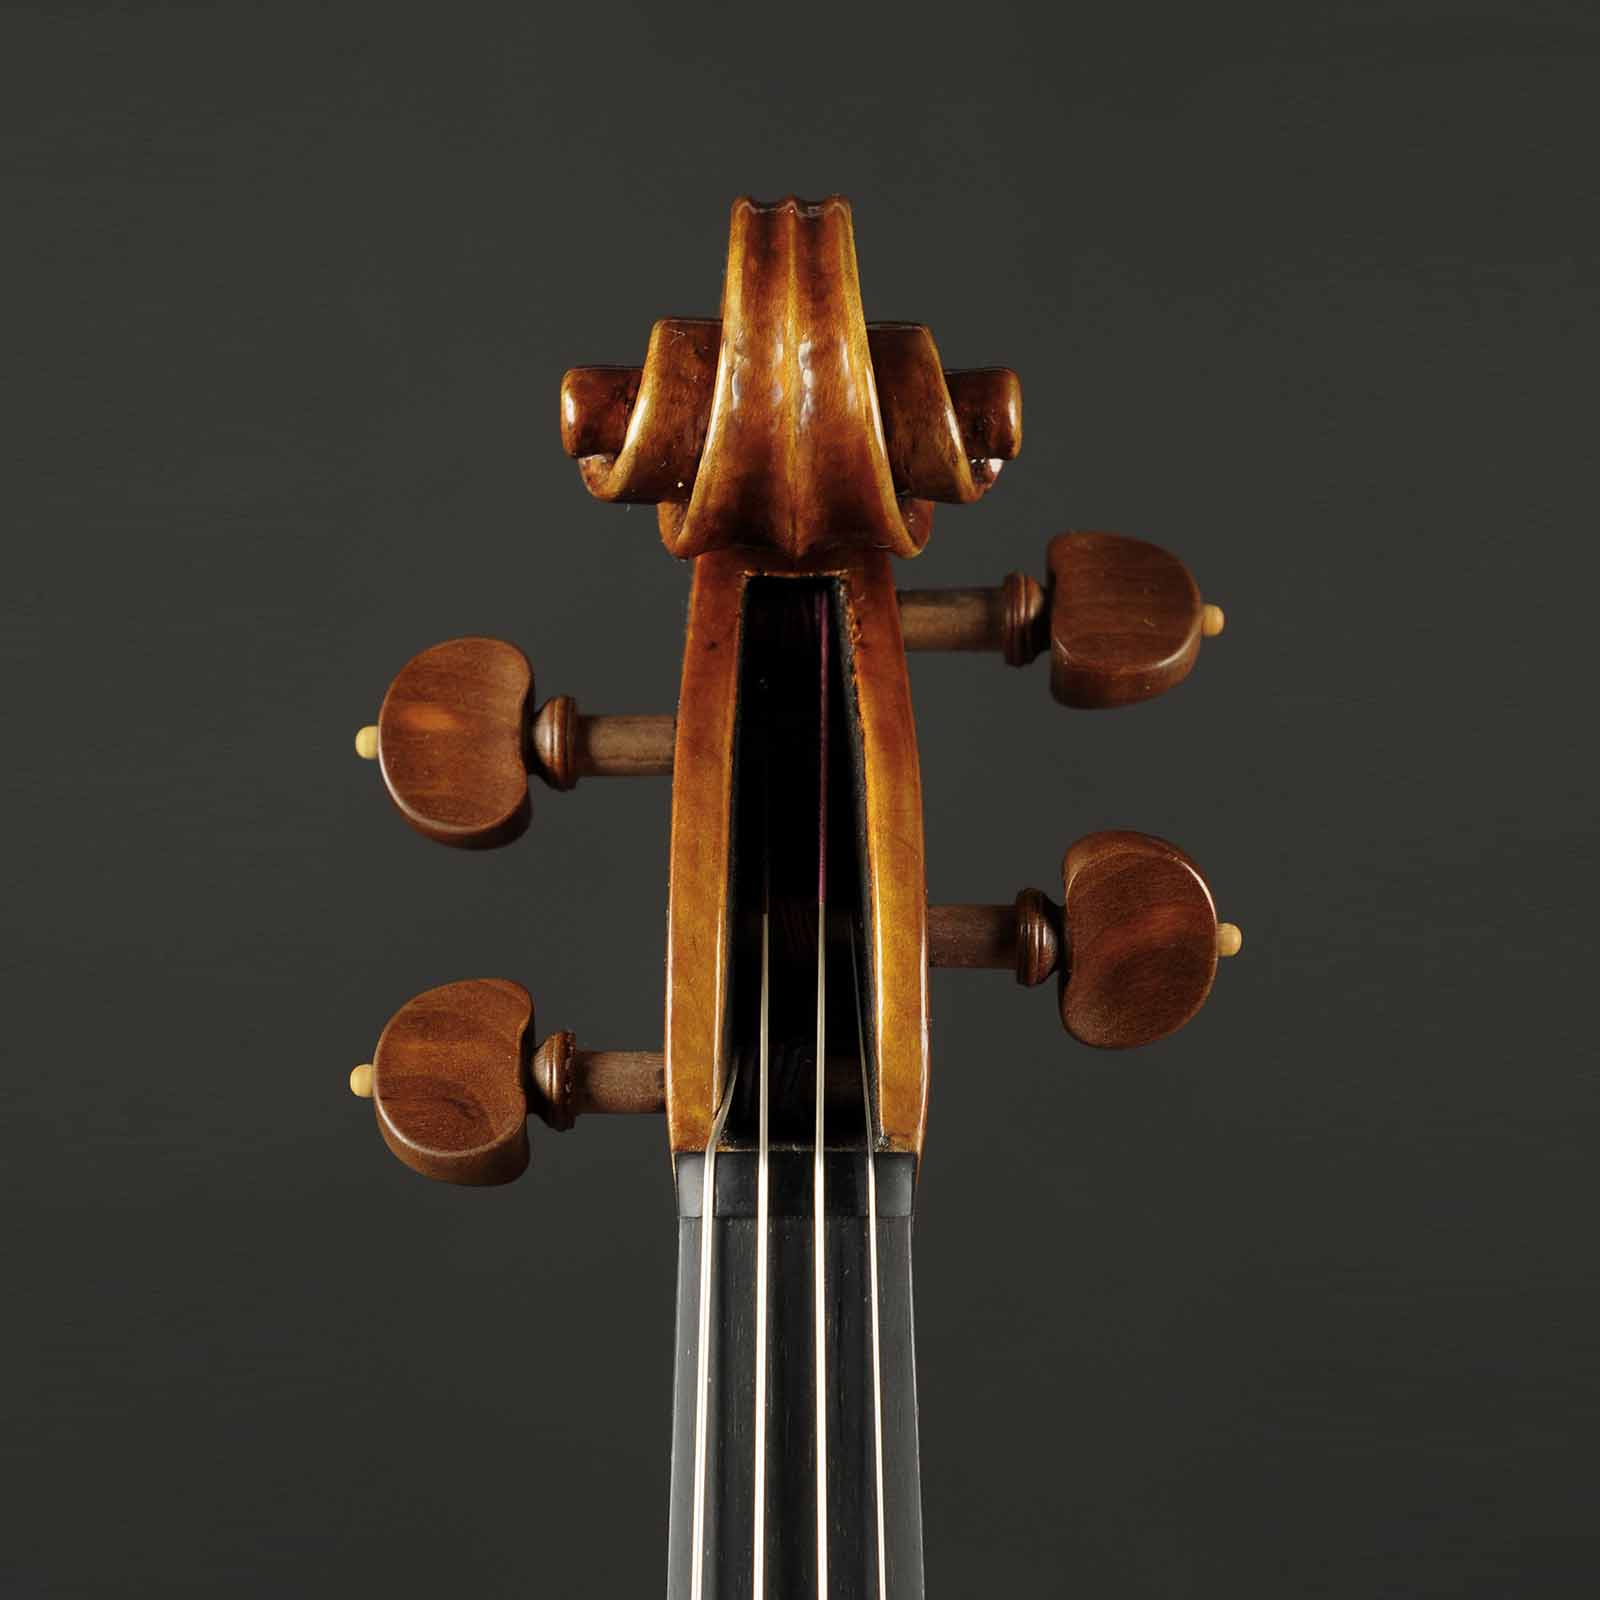 Antonio Stradivari Cremona 1672 “Renaissance Wood“ cm 42 - Image 5